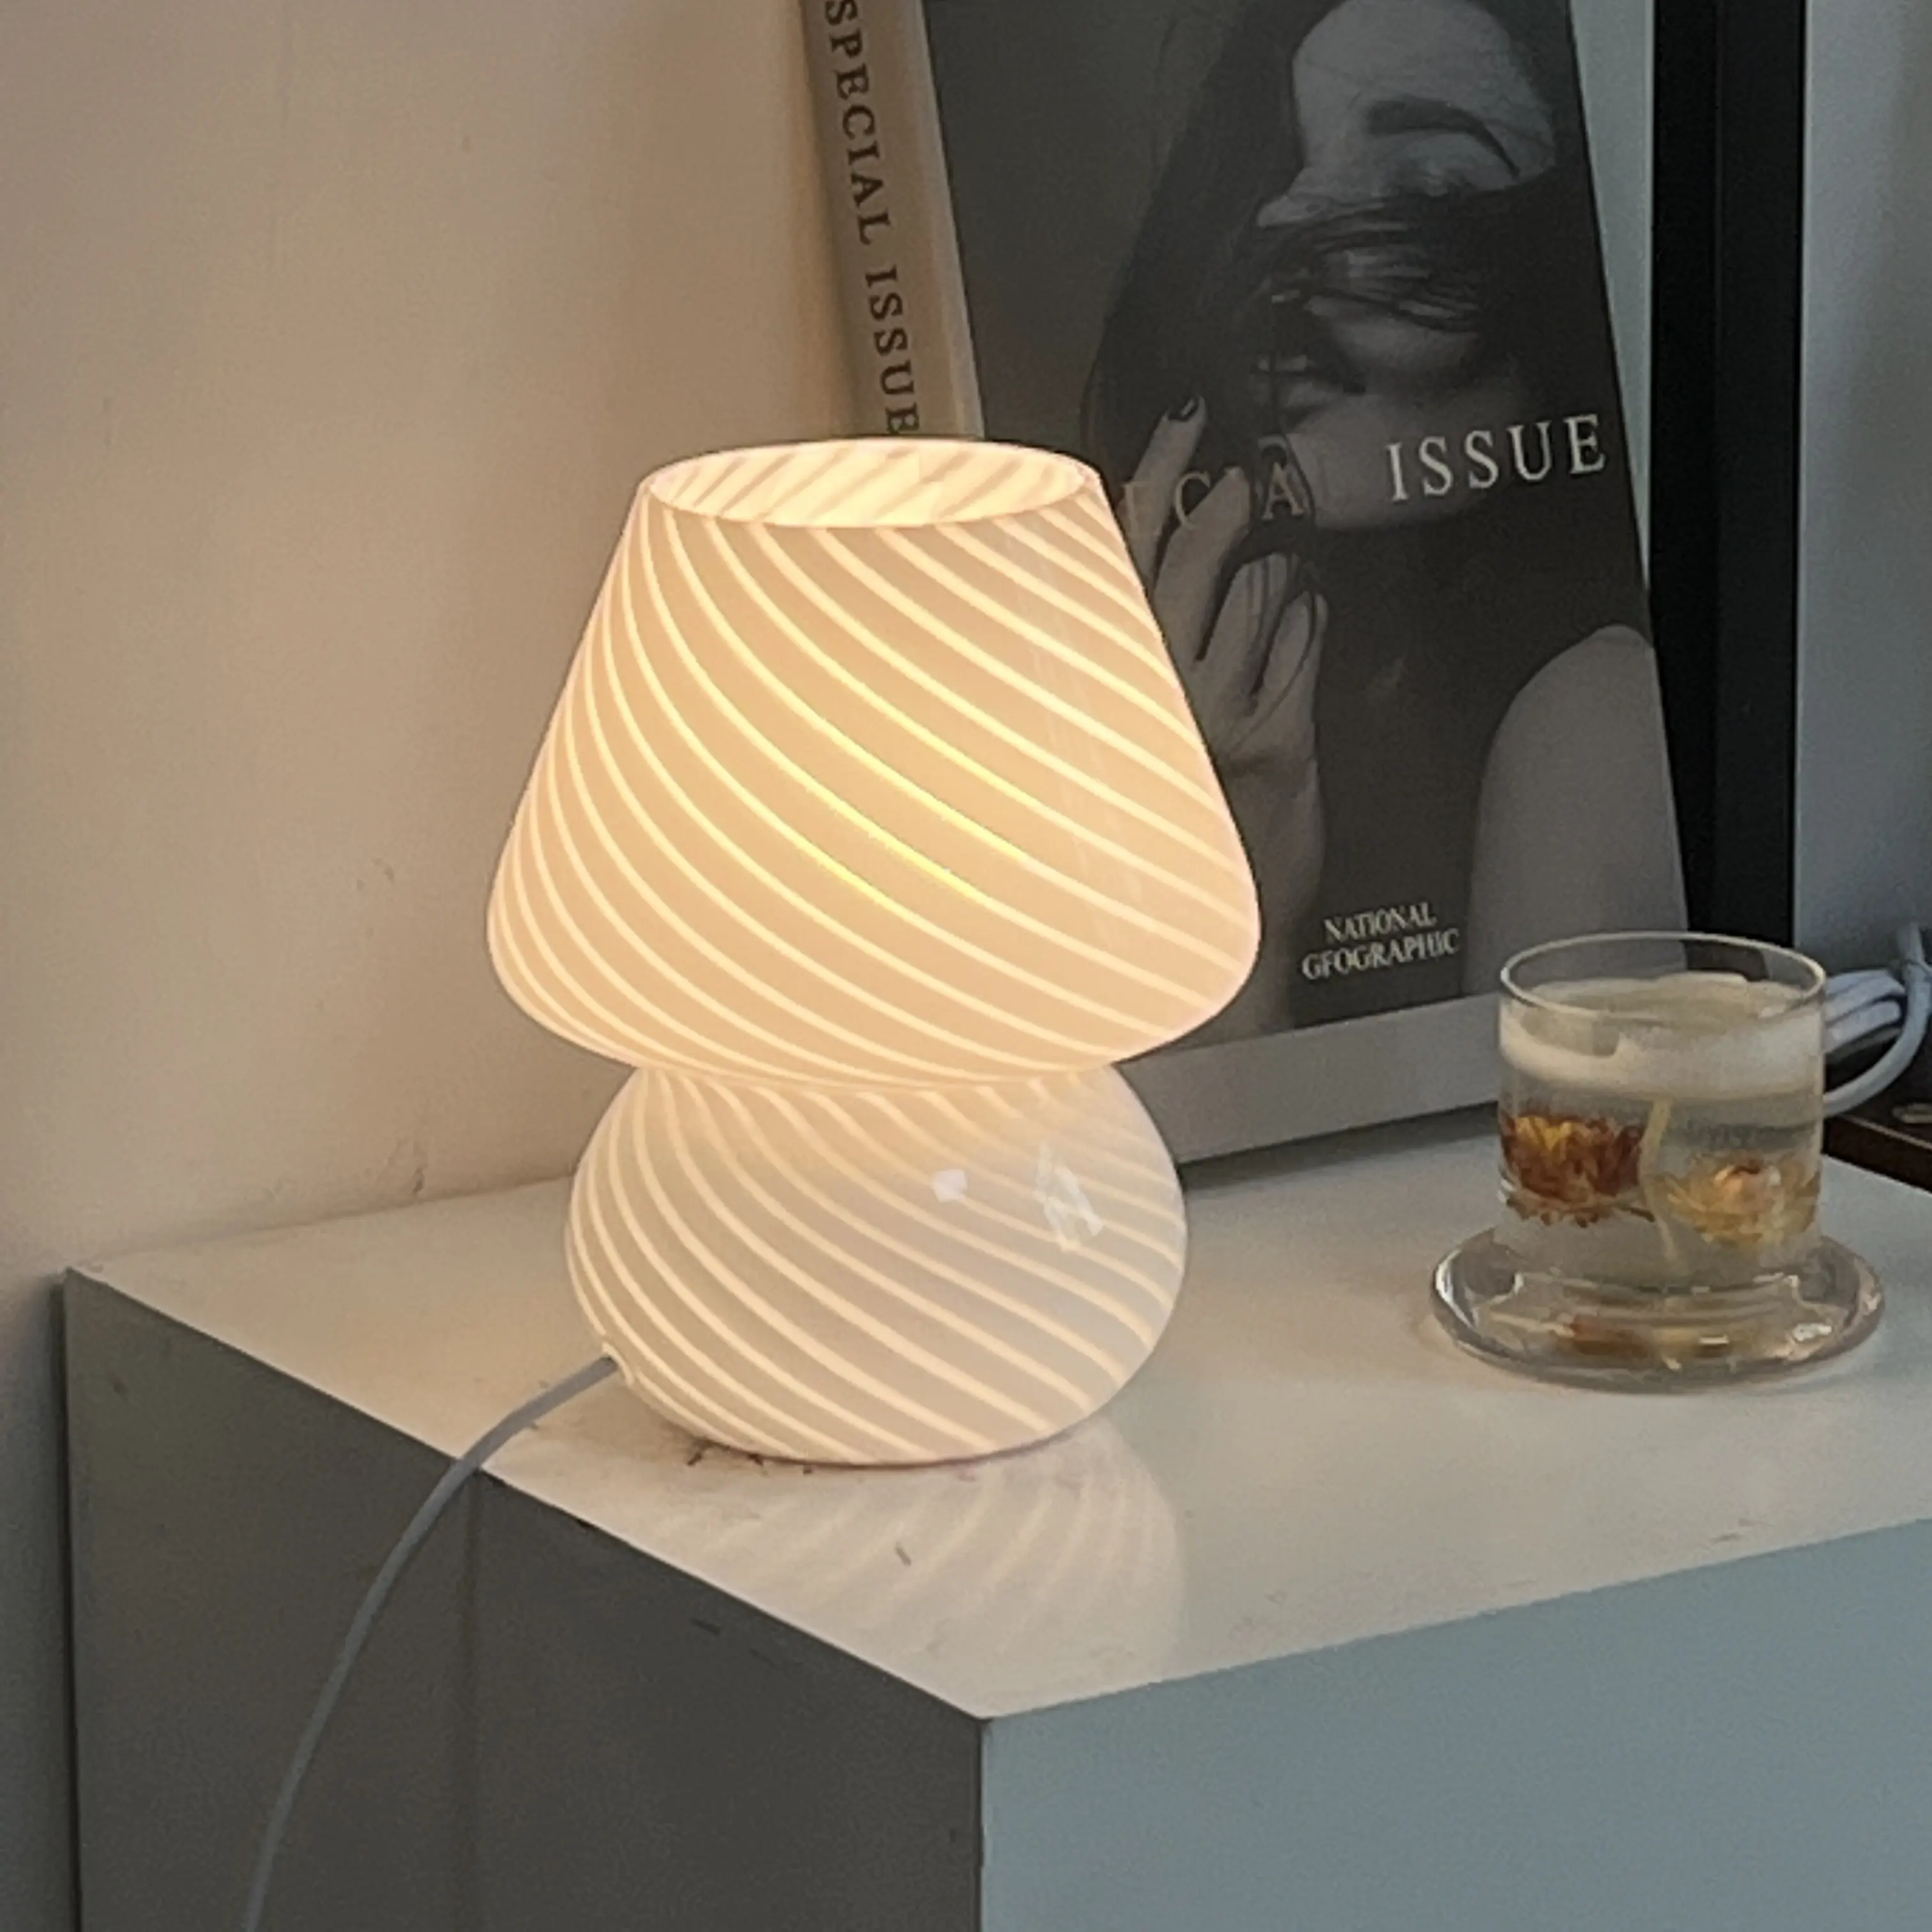 Kinscoter Glass Striped Desk Lamps Usb Bedside Living Room Bedroom Decor Table Mushroom Lamp